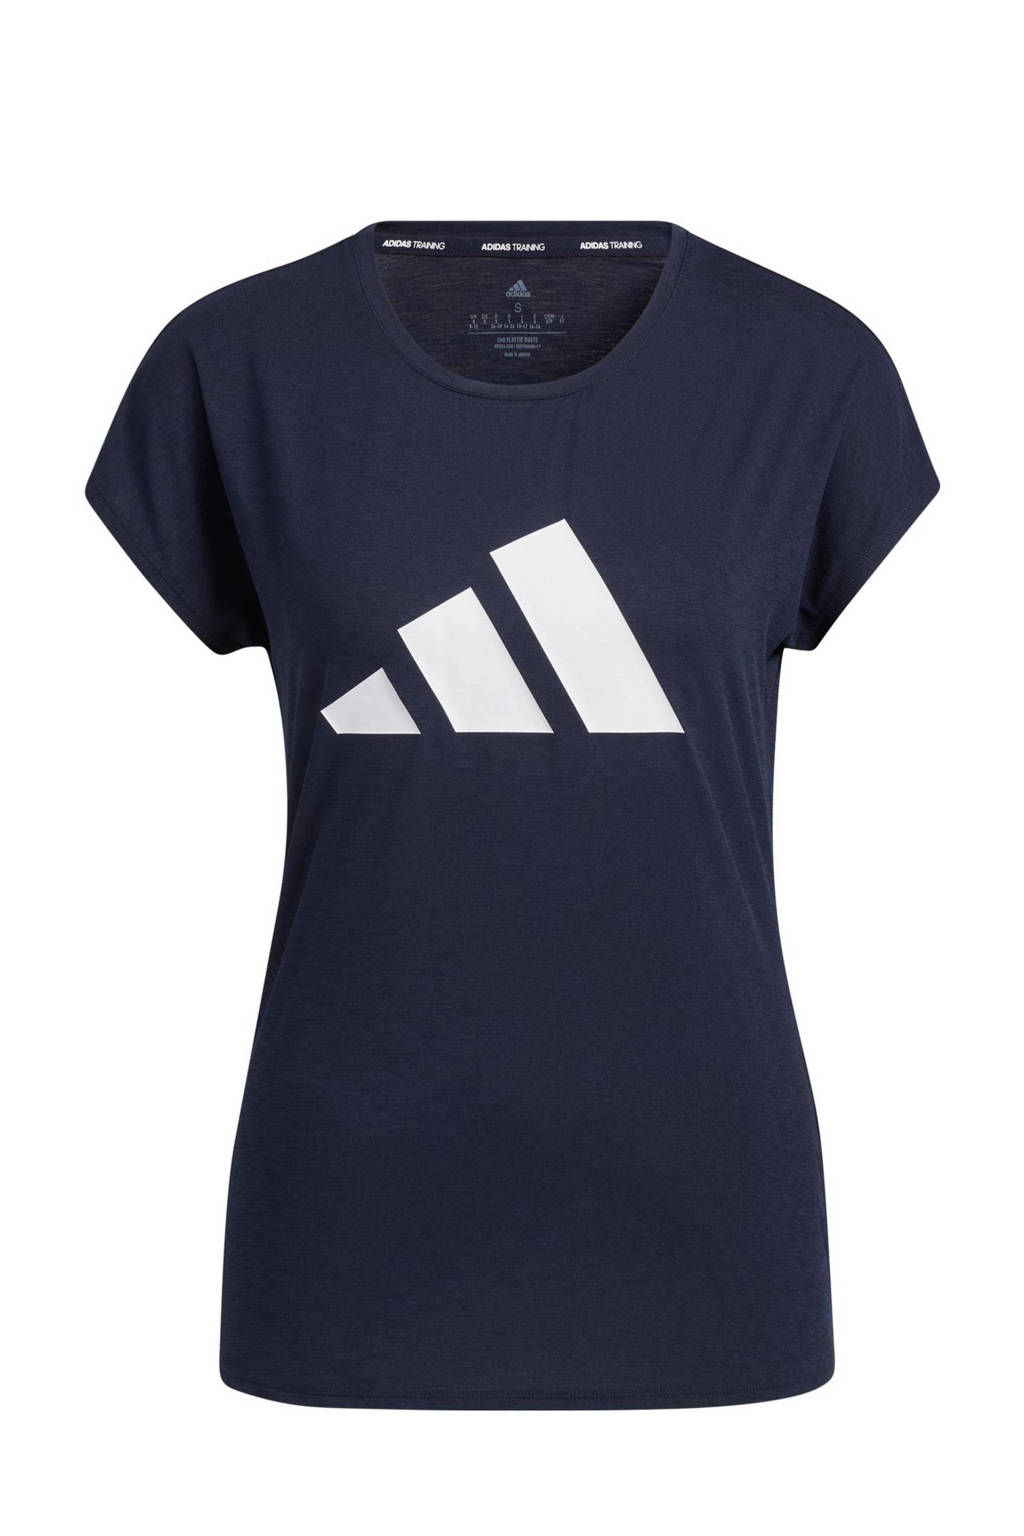 adidas Performance sport T-shirt donkerblauw/wit